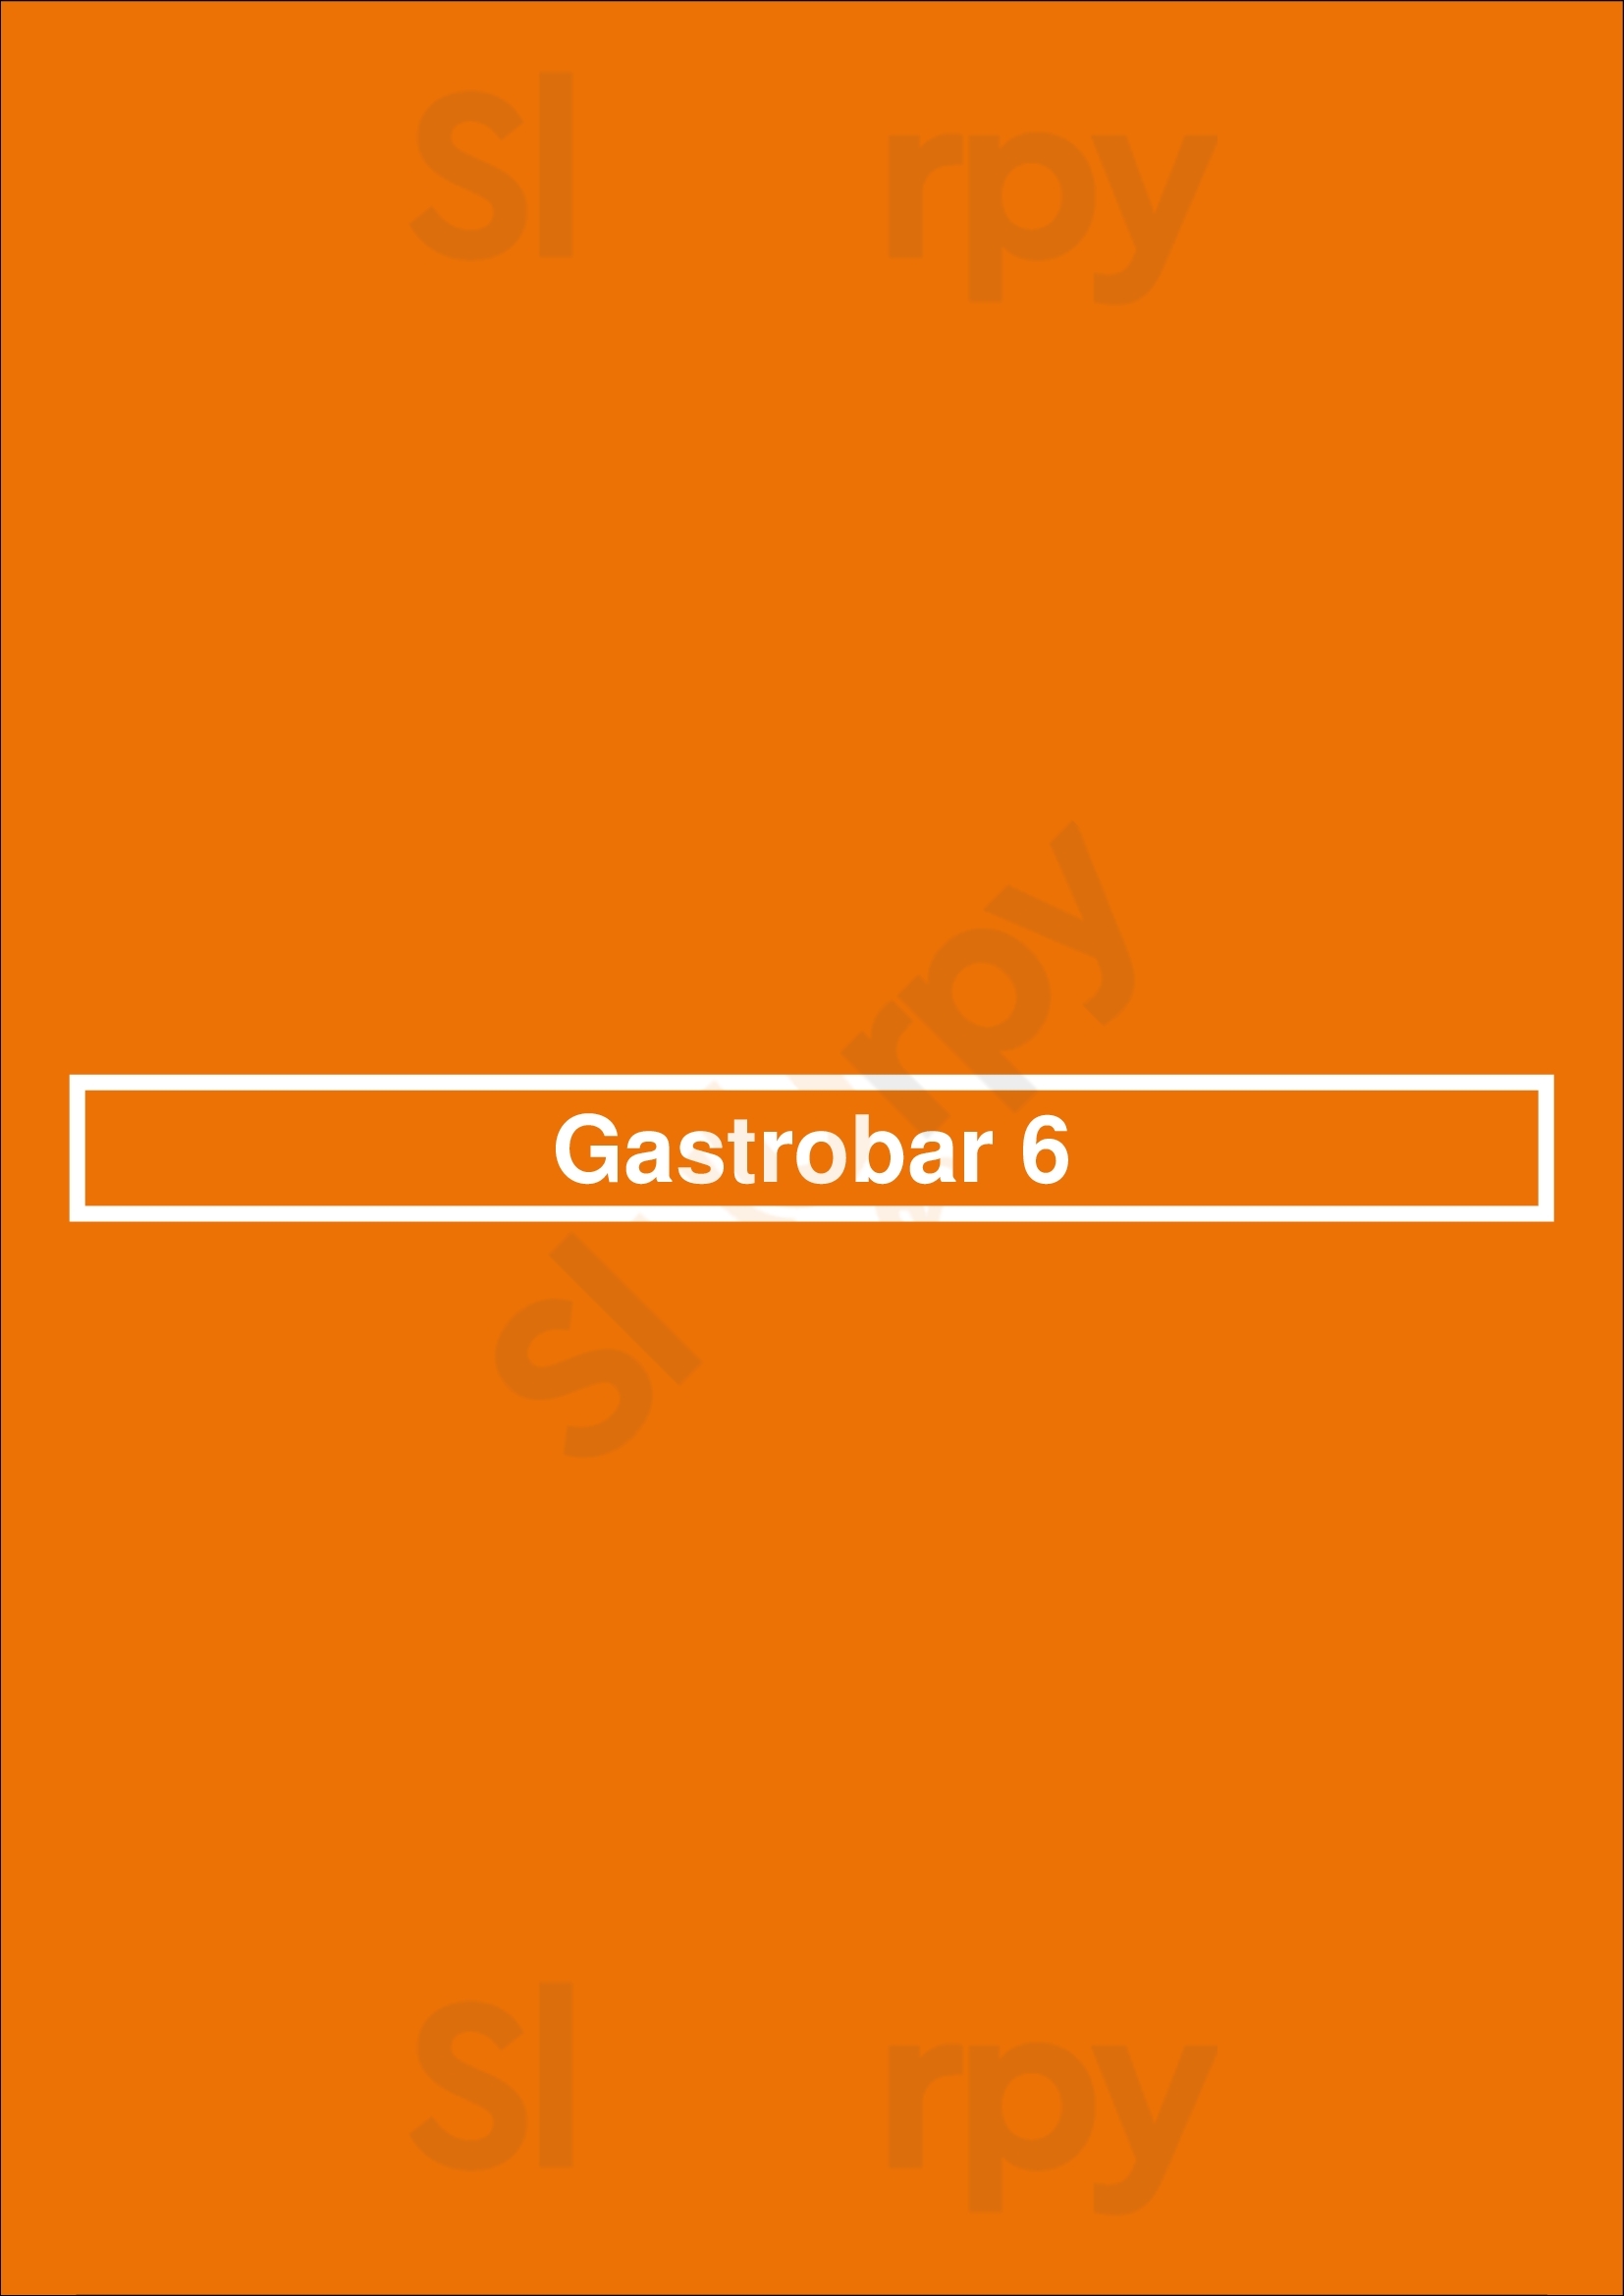 Gastrobar 6 Den Bosch Menu - 1